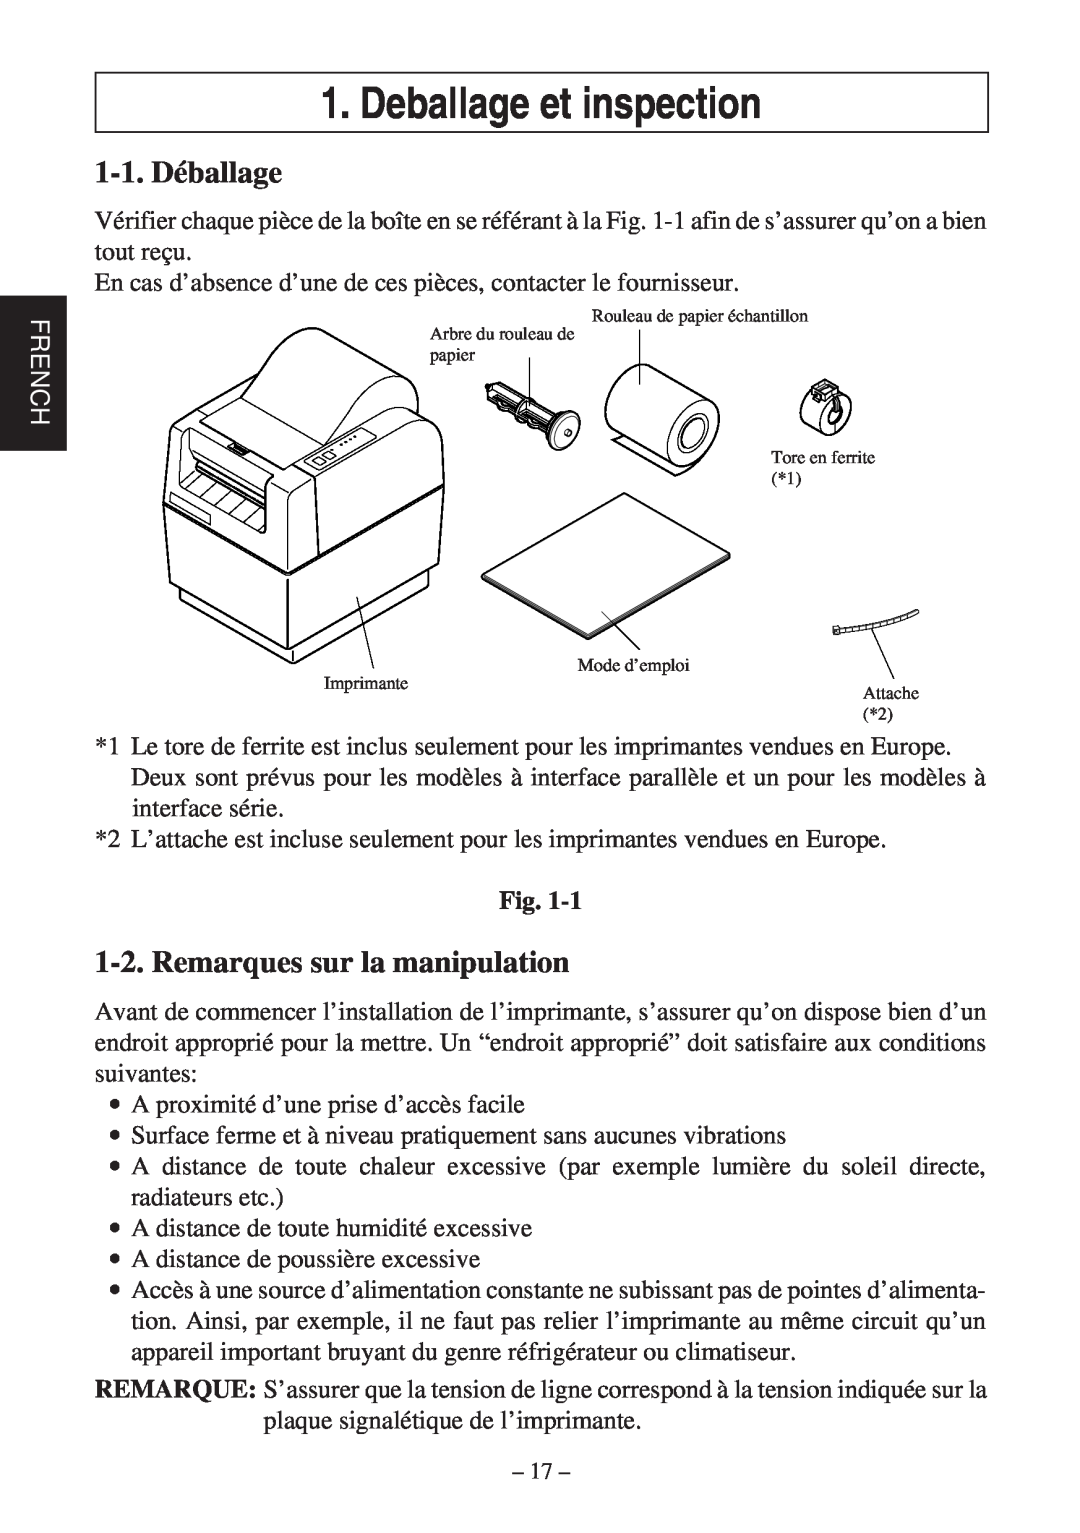 Star Micronics TSP400Z Series user manual Deballage et inspection, 1-1. Déballage, Remarques sur la manipulation, French 